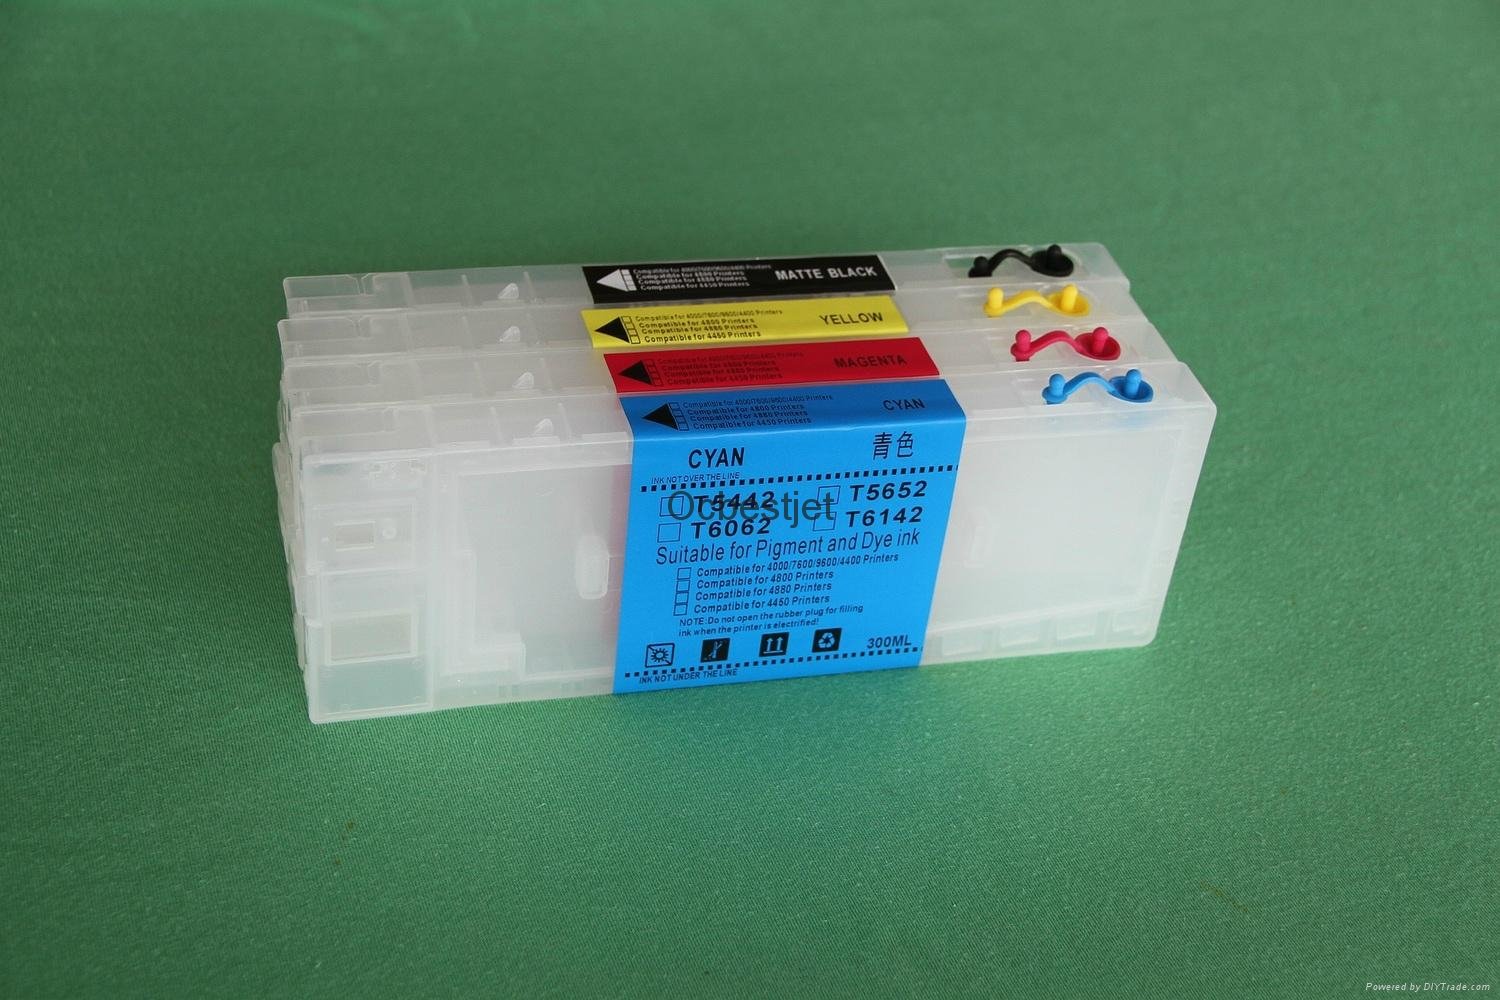 EPSON Stylus Pro 4400 refill ink cartridge 5